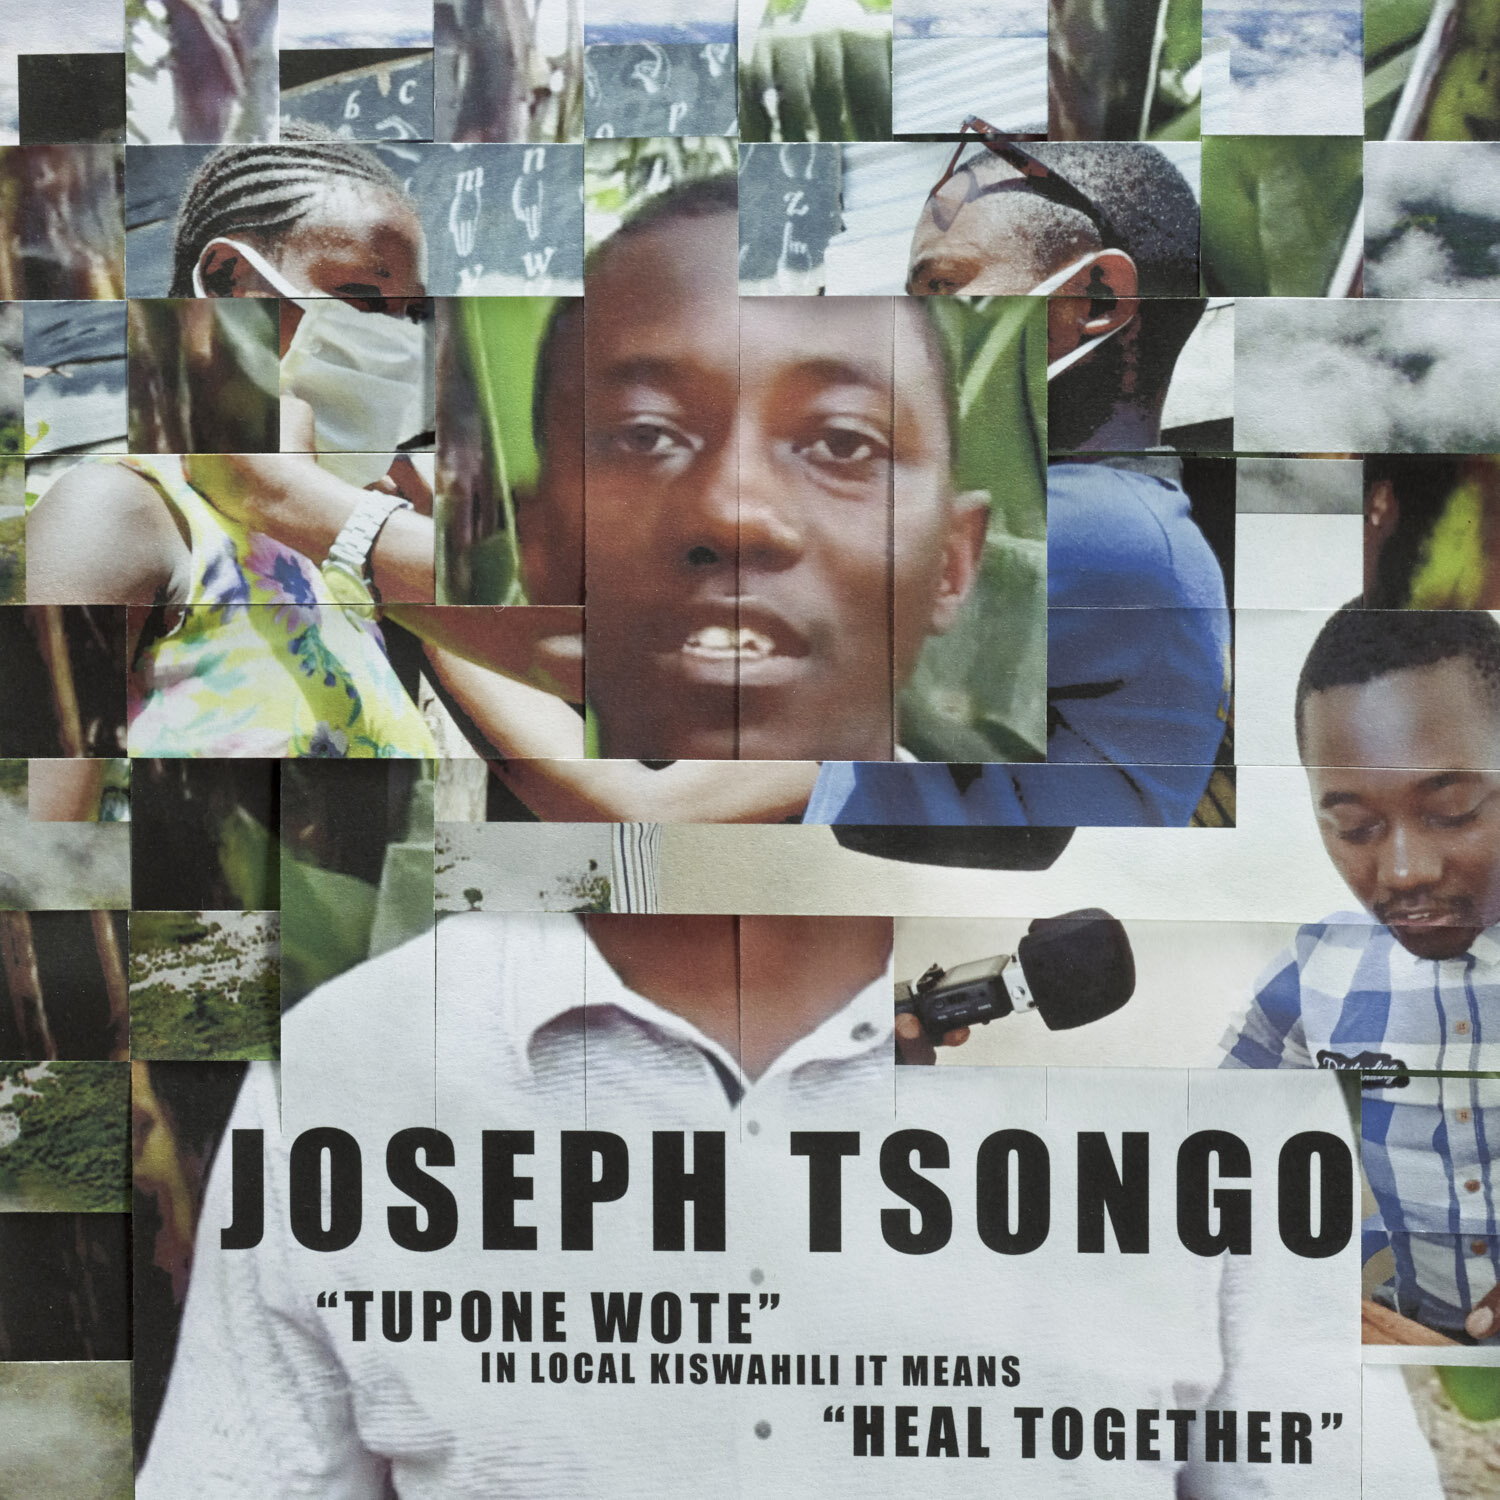 Day 86: "Youth Leader" Joseph Tsongo